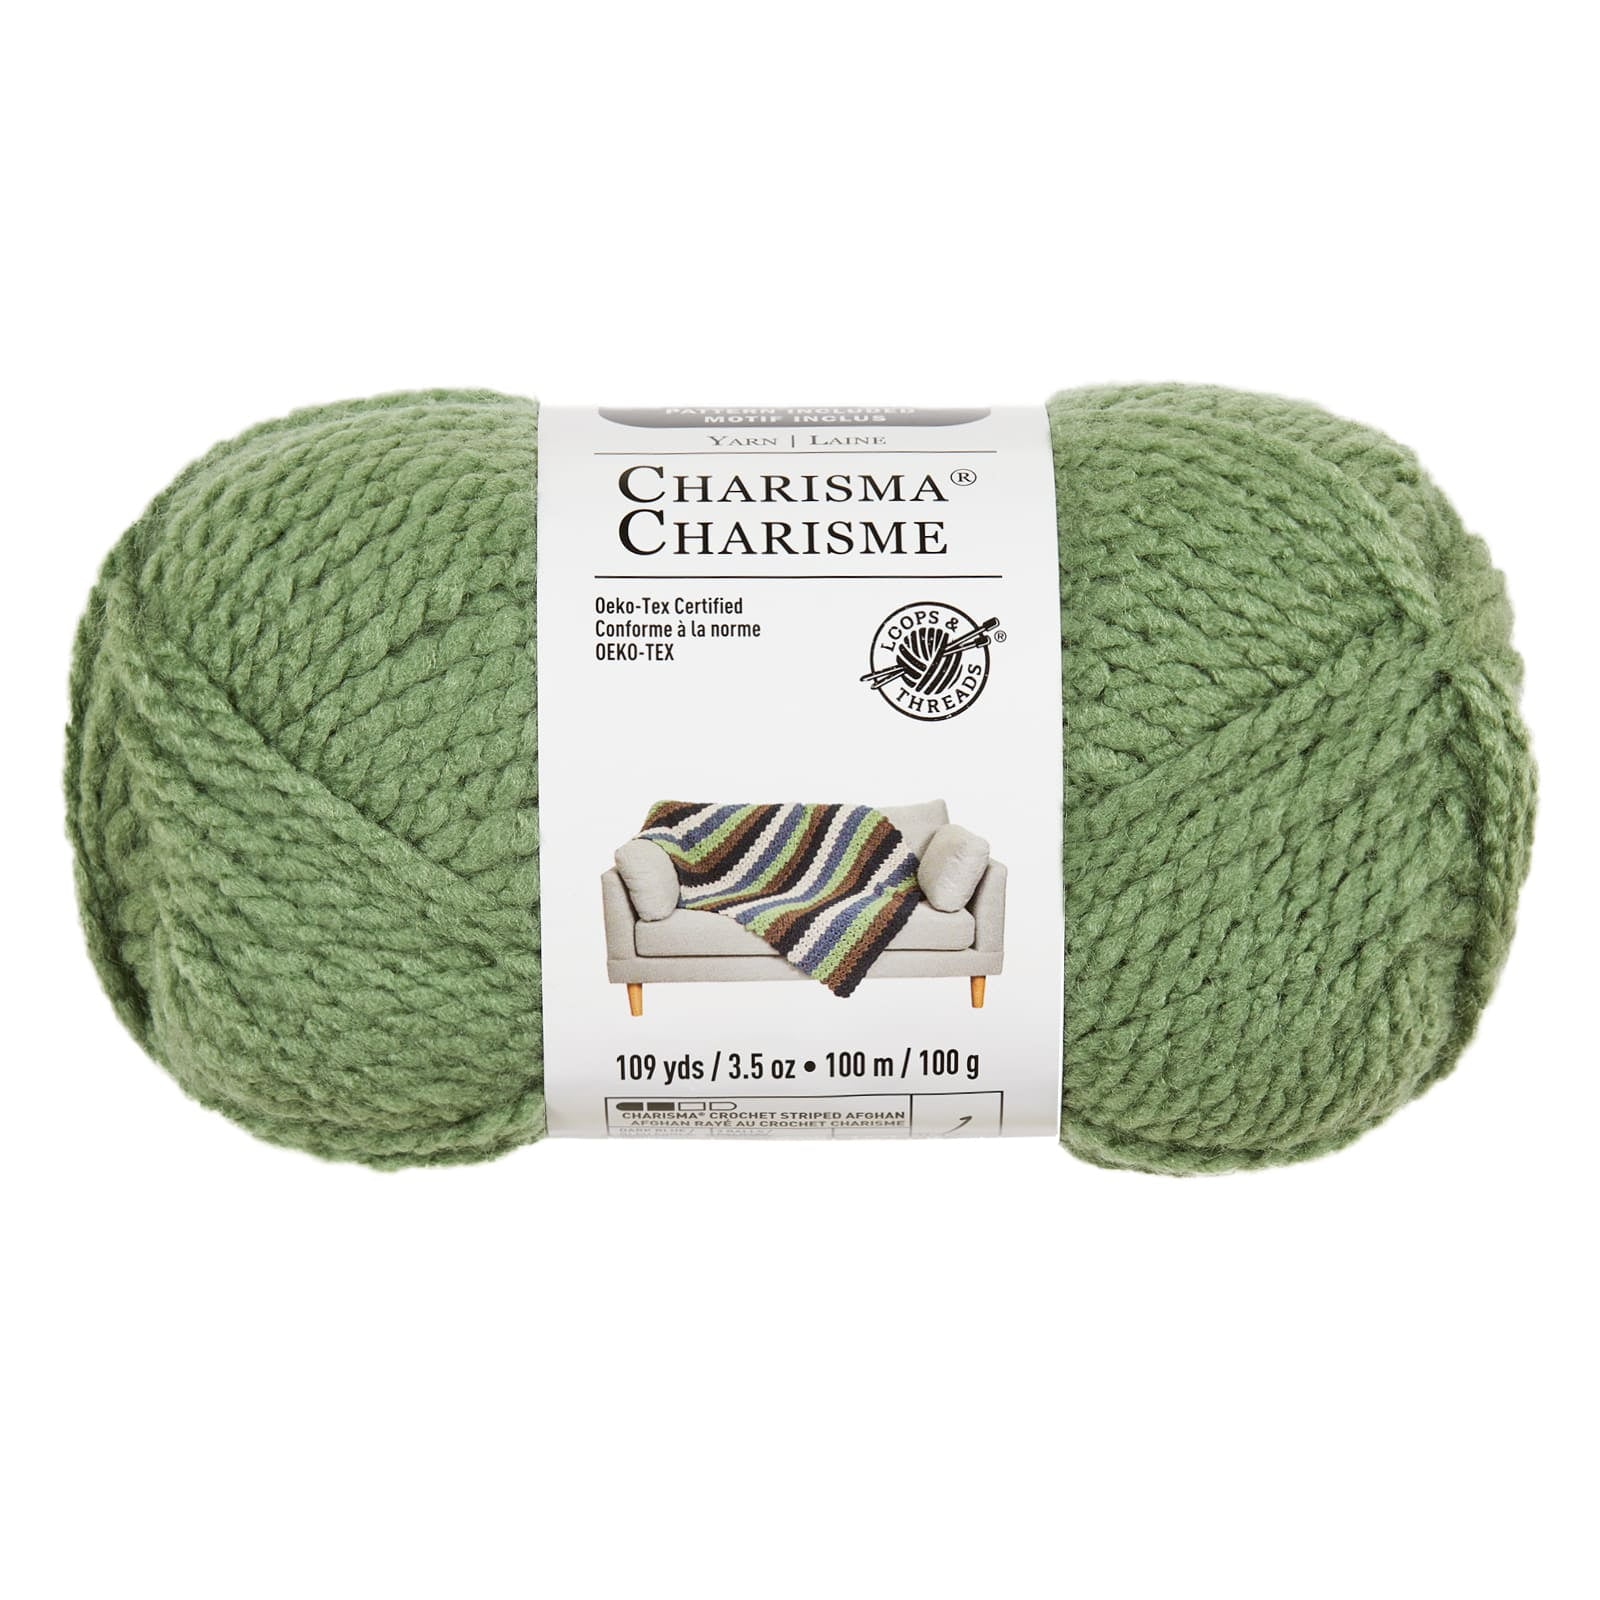 Loops & Threads Impeccable Yarn - Sage & Multicolor - 3.5 oz